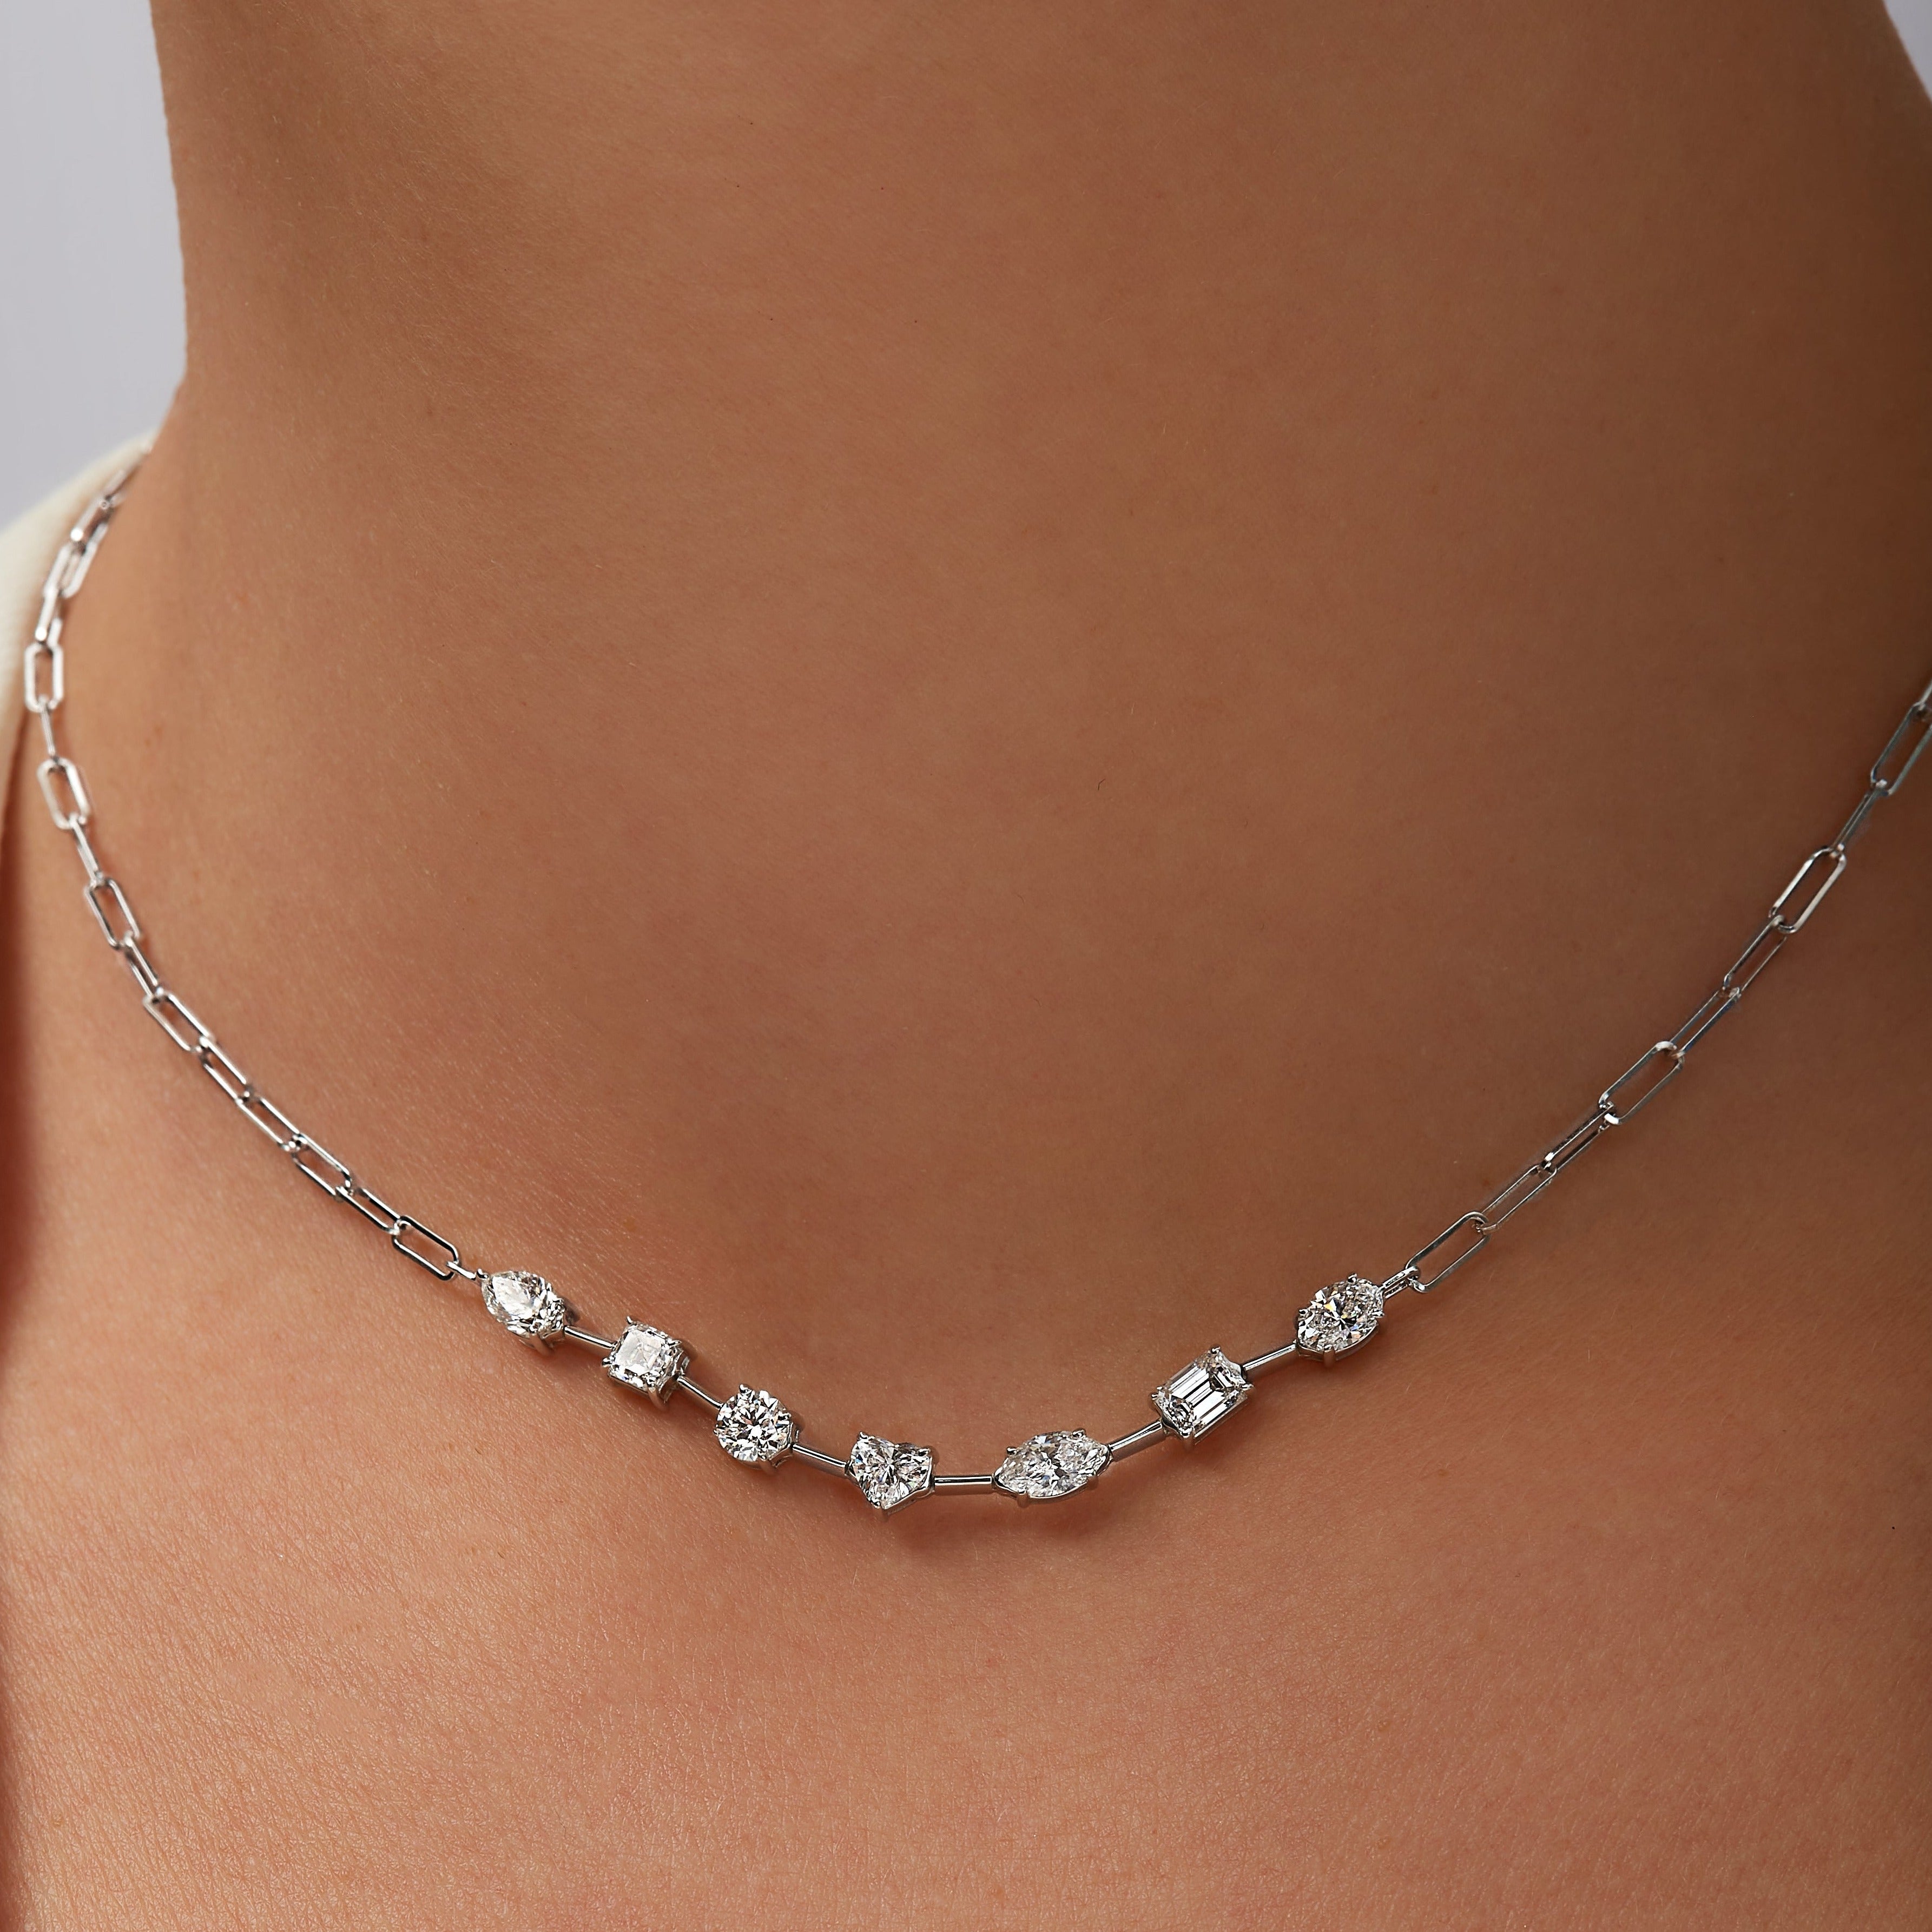 1.73ct. Fancy Shape Diamond Necklace in 18K White Gold